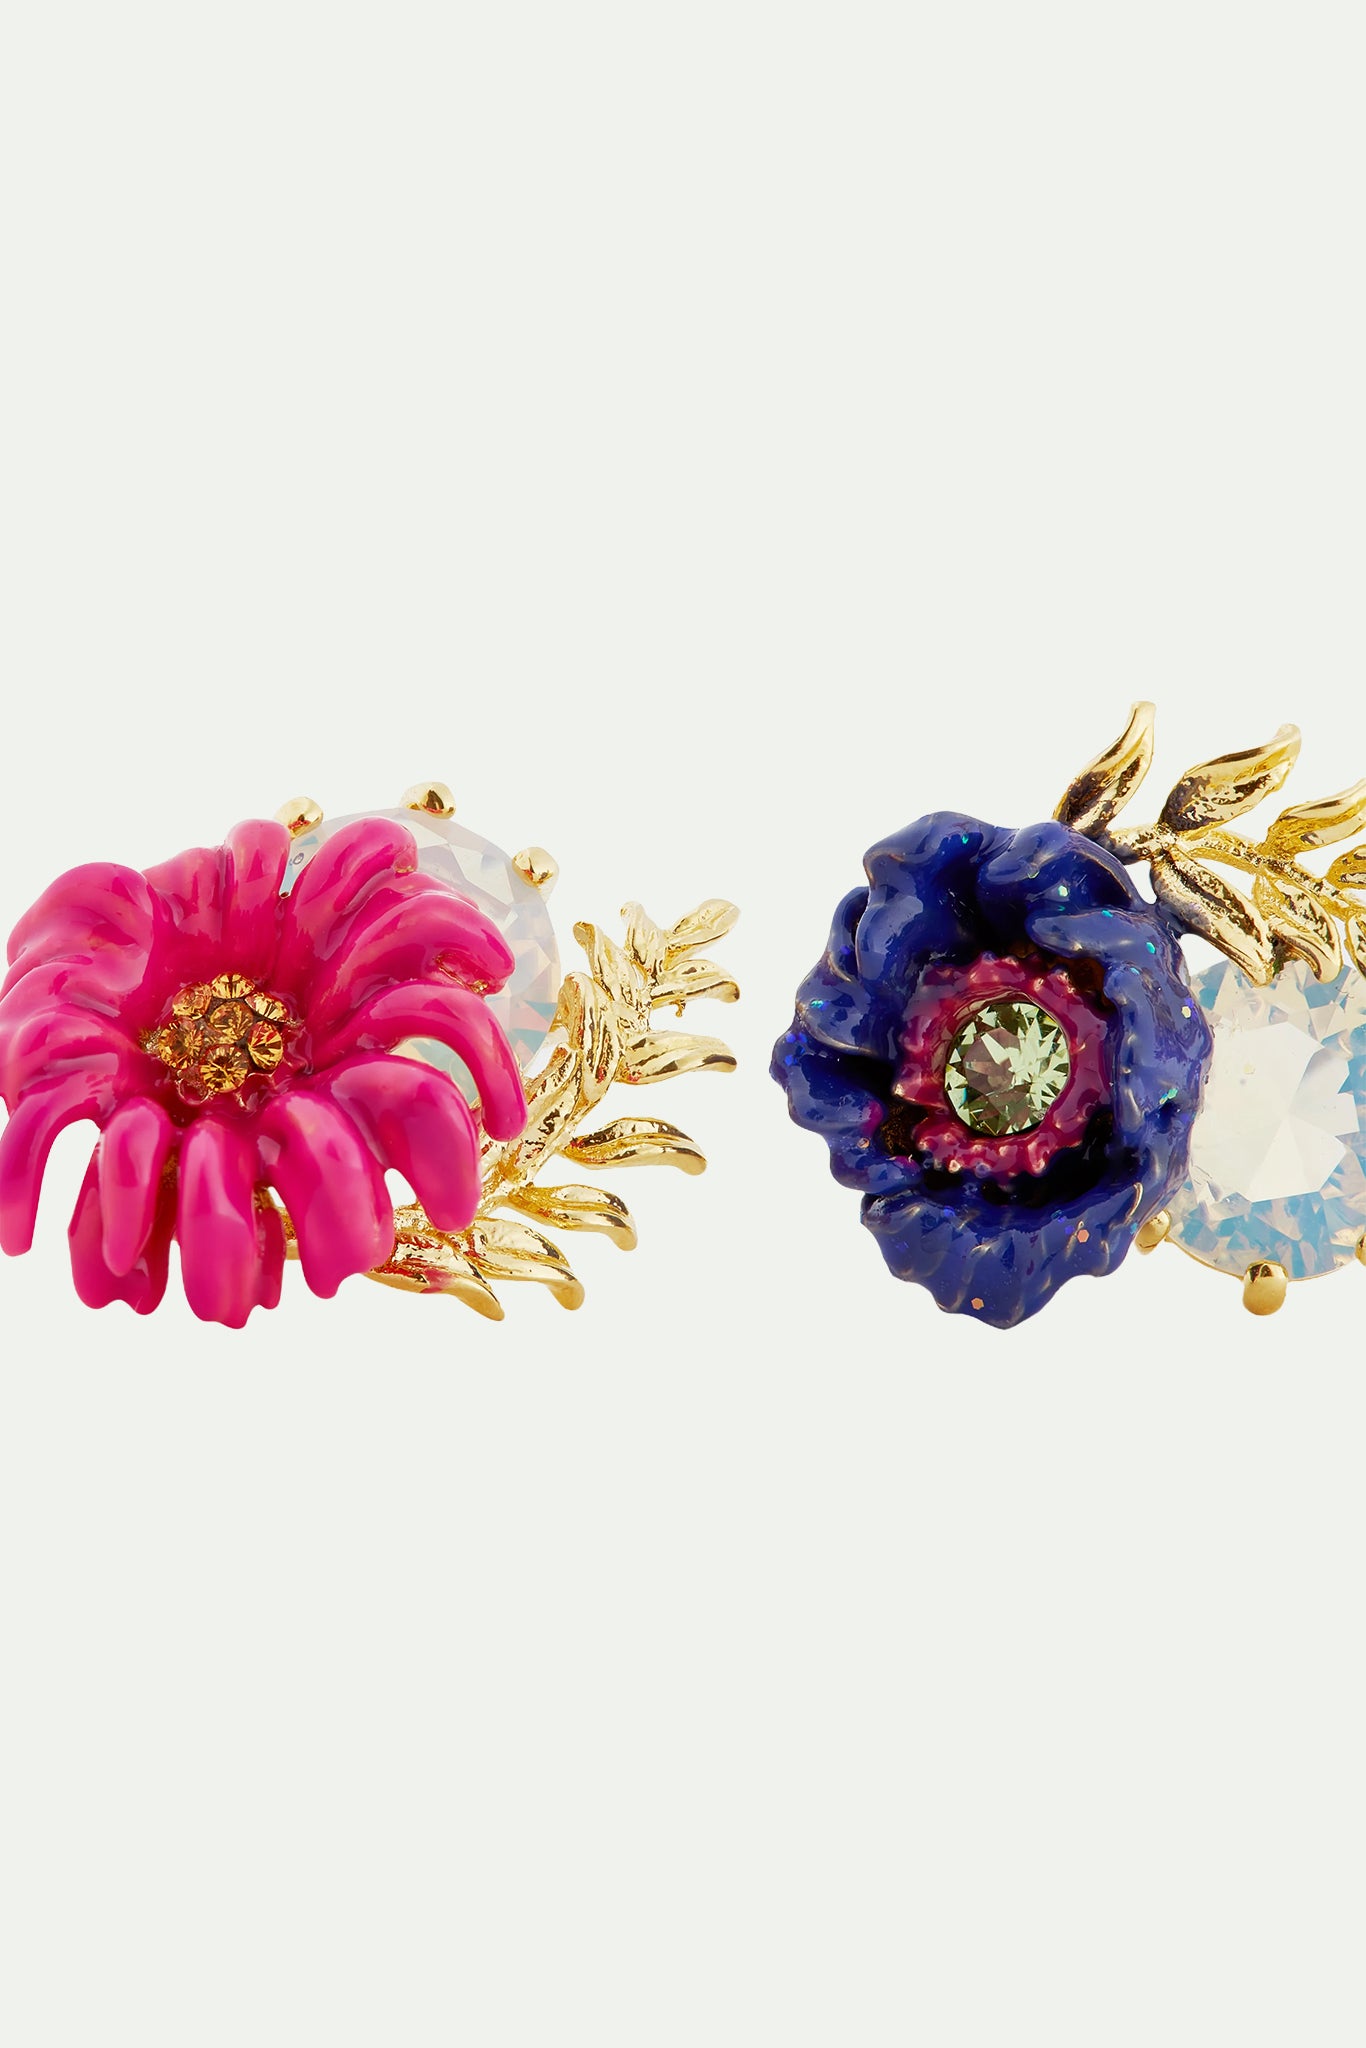 Imaginary flower and crystal sleeper earrings